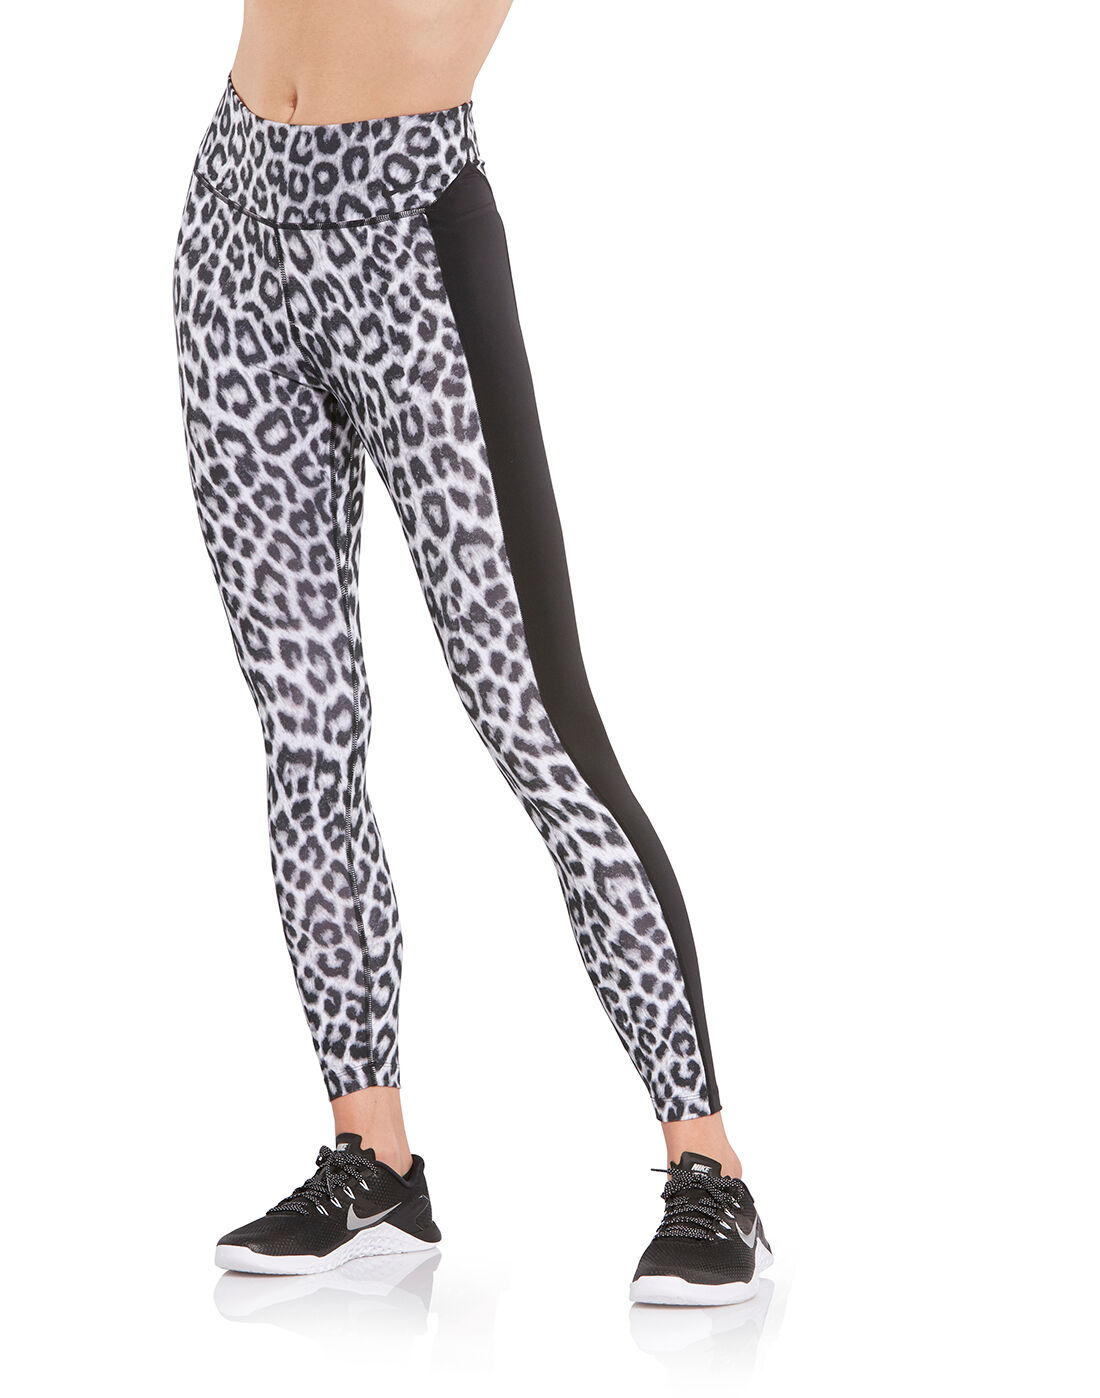 Nike Womens One Leopard Leggings 